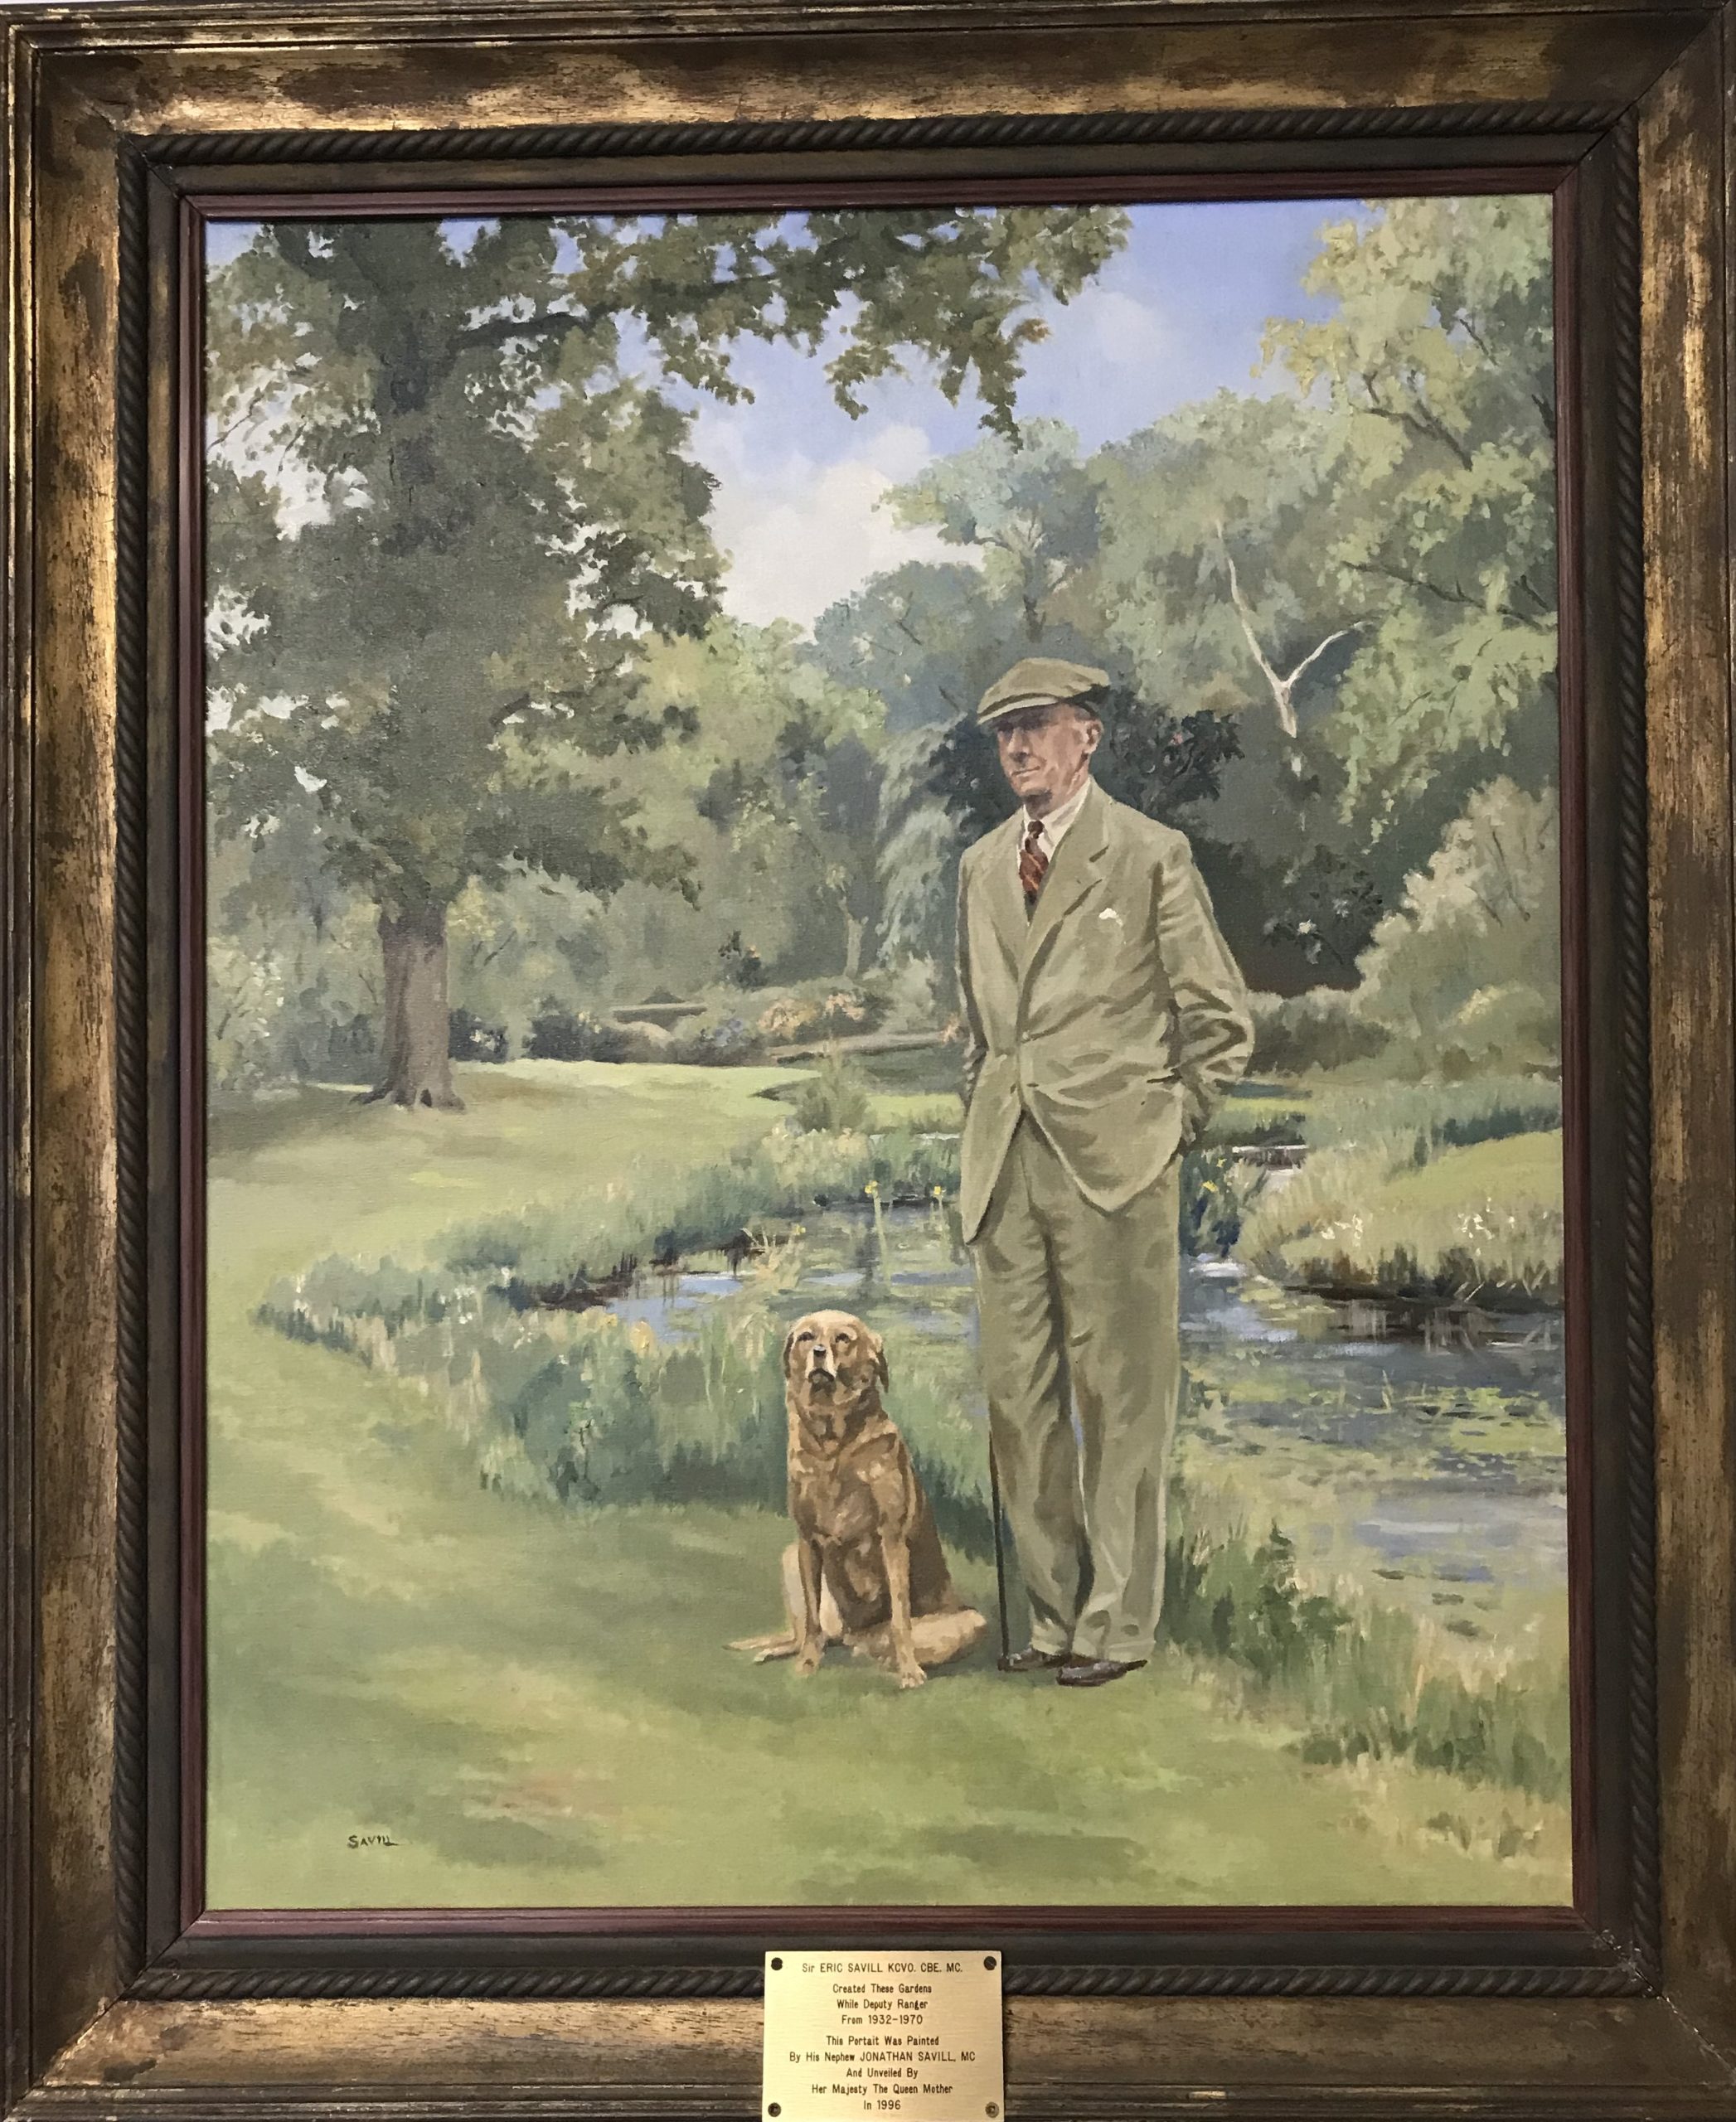 A framed artist portrait of Eric Savill and a dog in The Savill Garden.